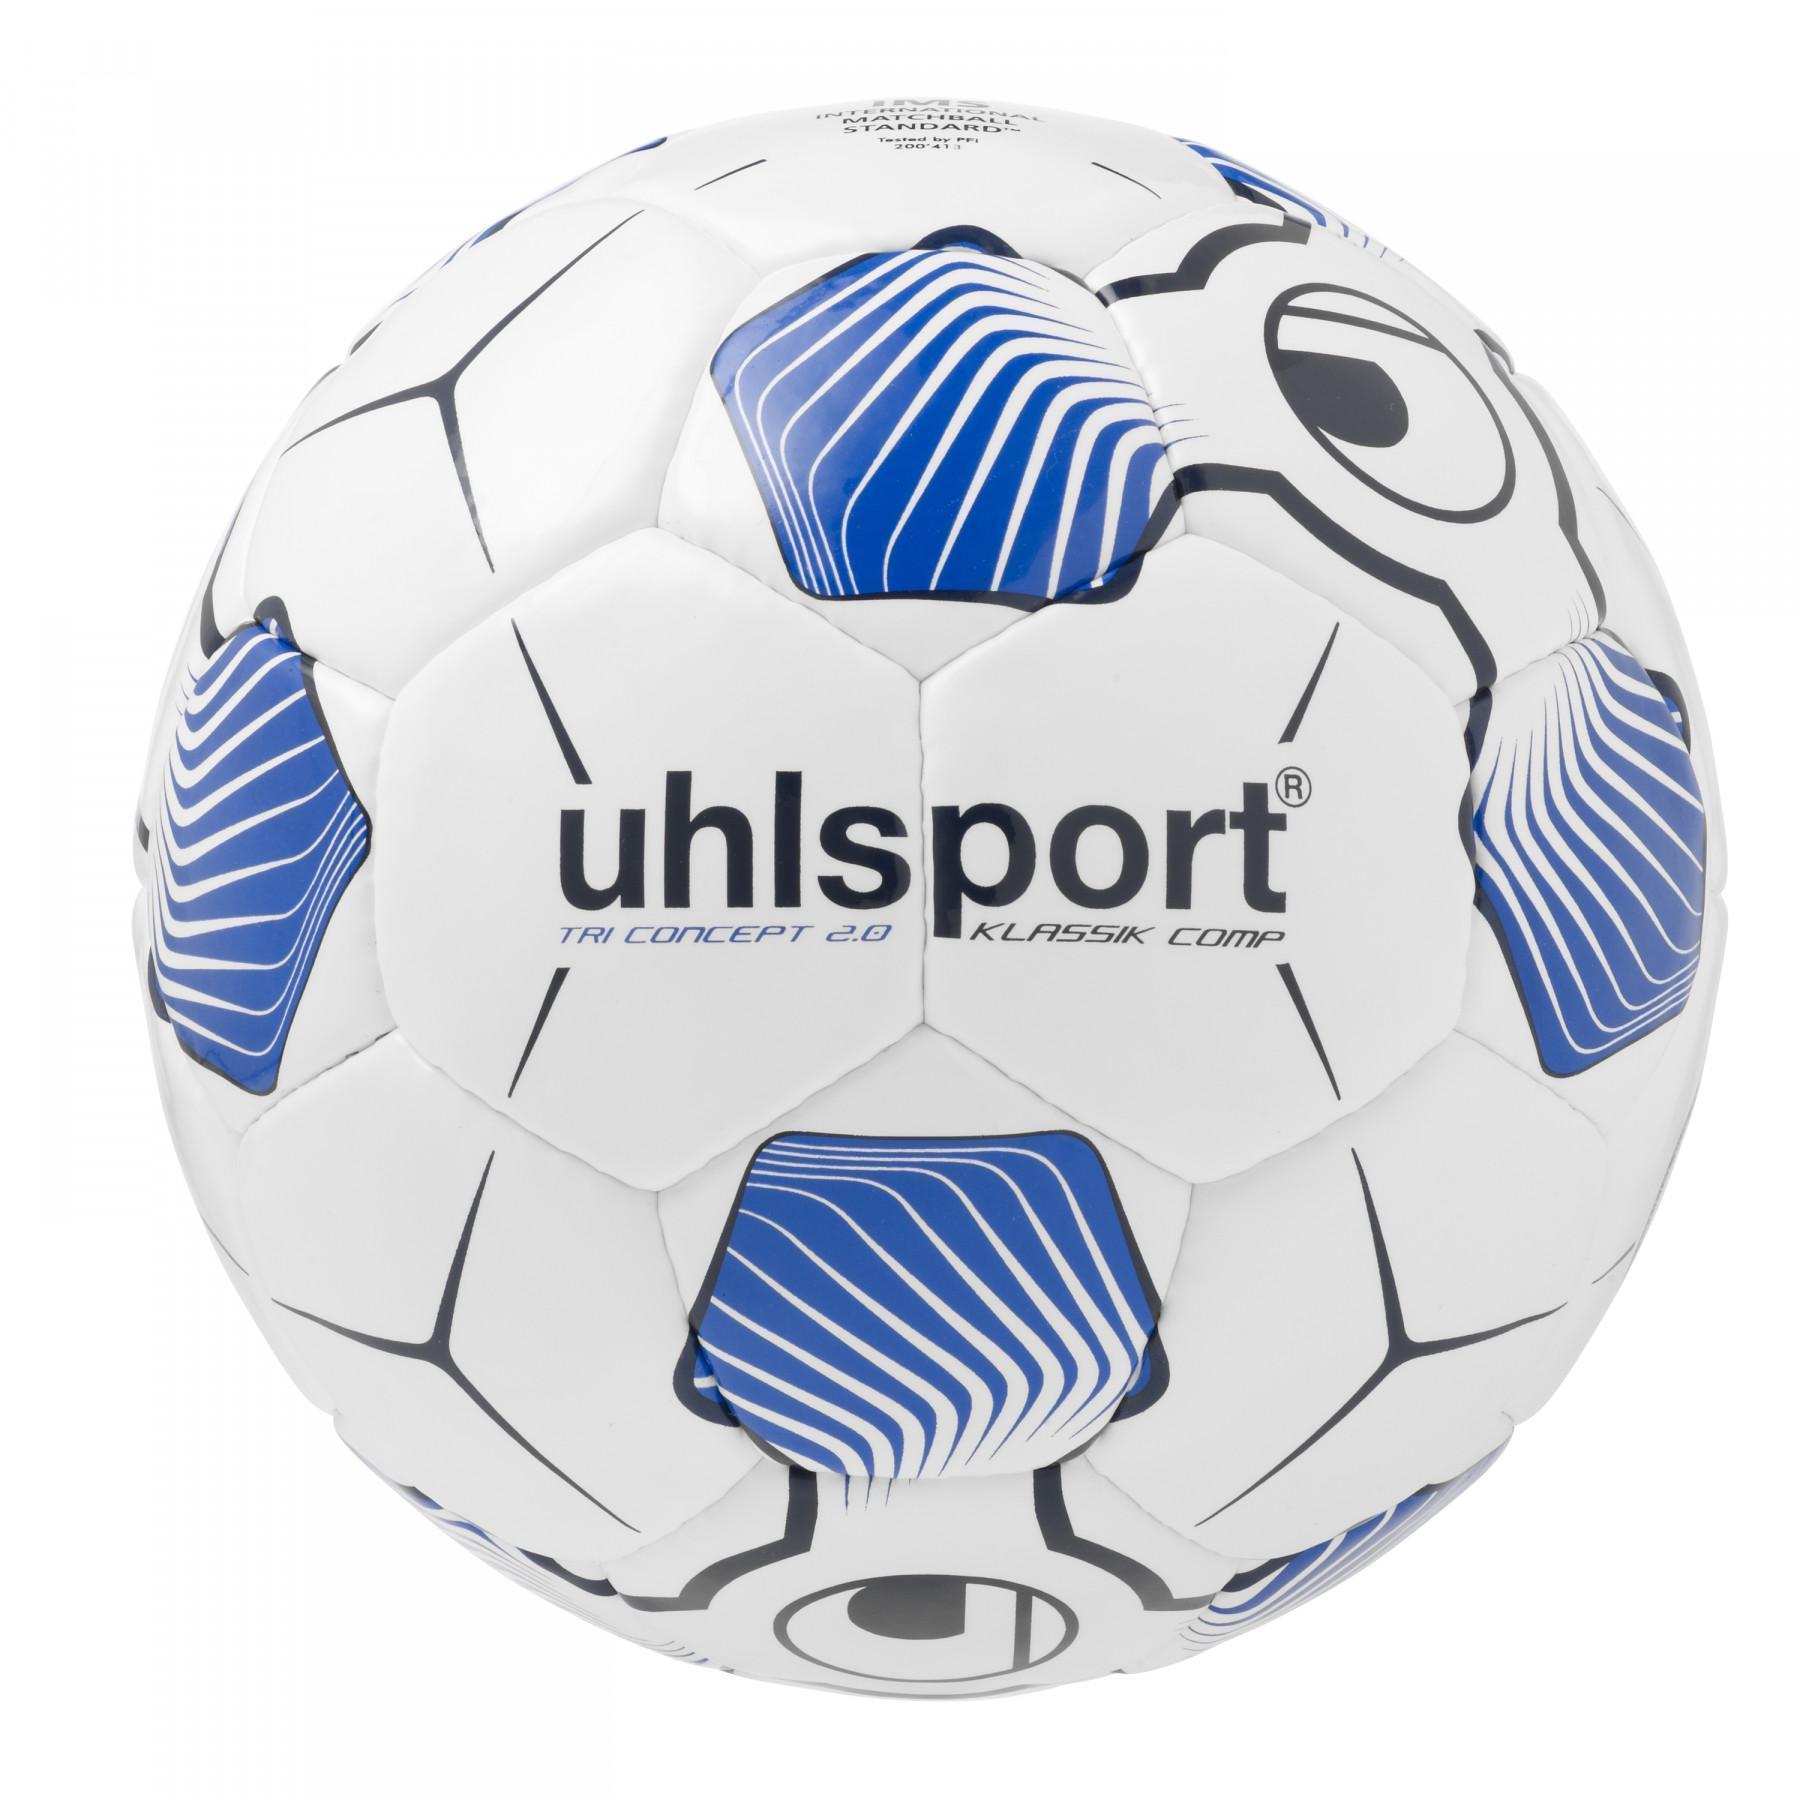 Ballong Uhlsport Tri Concept 2.0 Klassik Comp